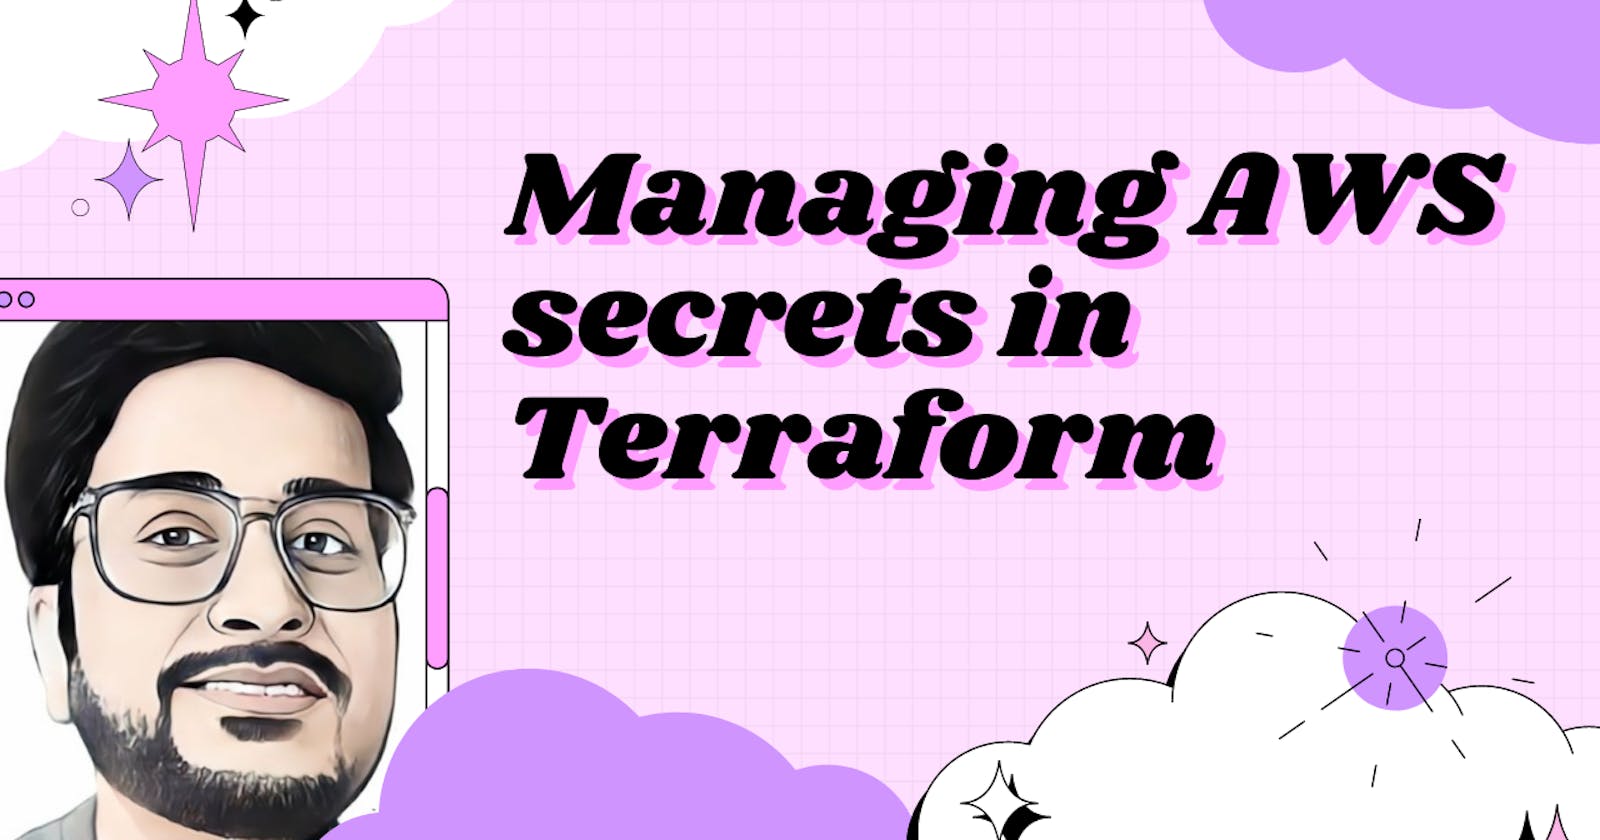 Managing AWS secrets in Terraform